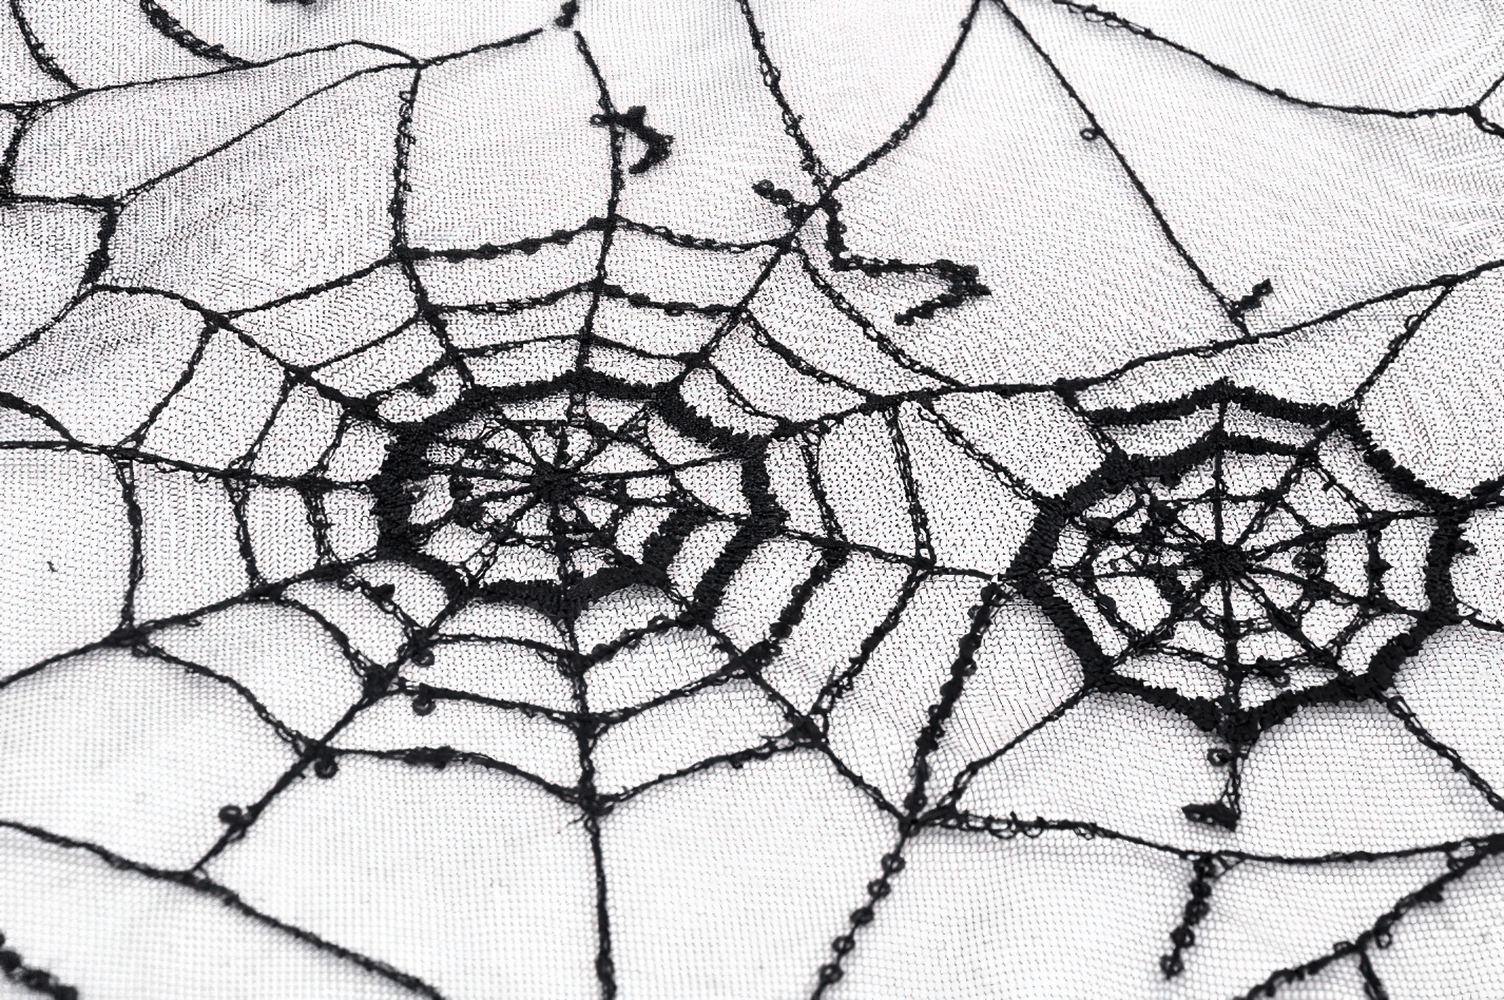 Mesmerizing Black Veil with Delicate Spiderweb Design